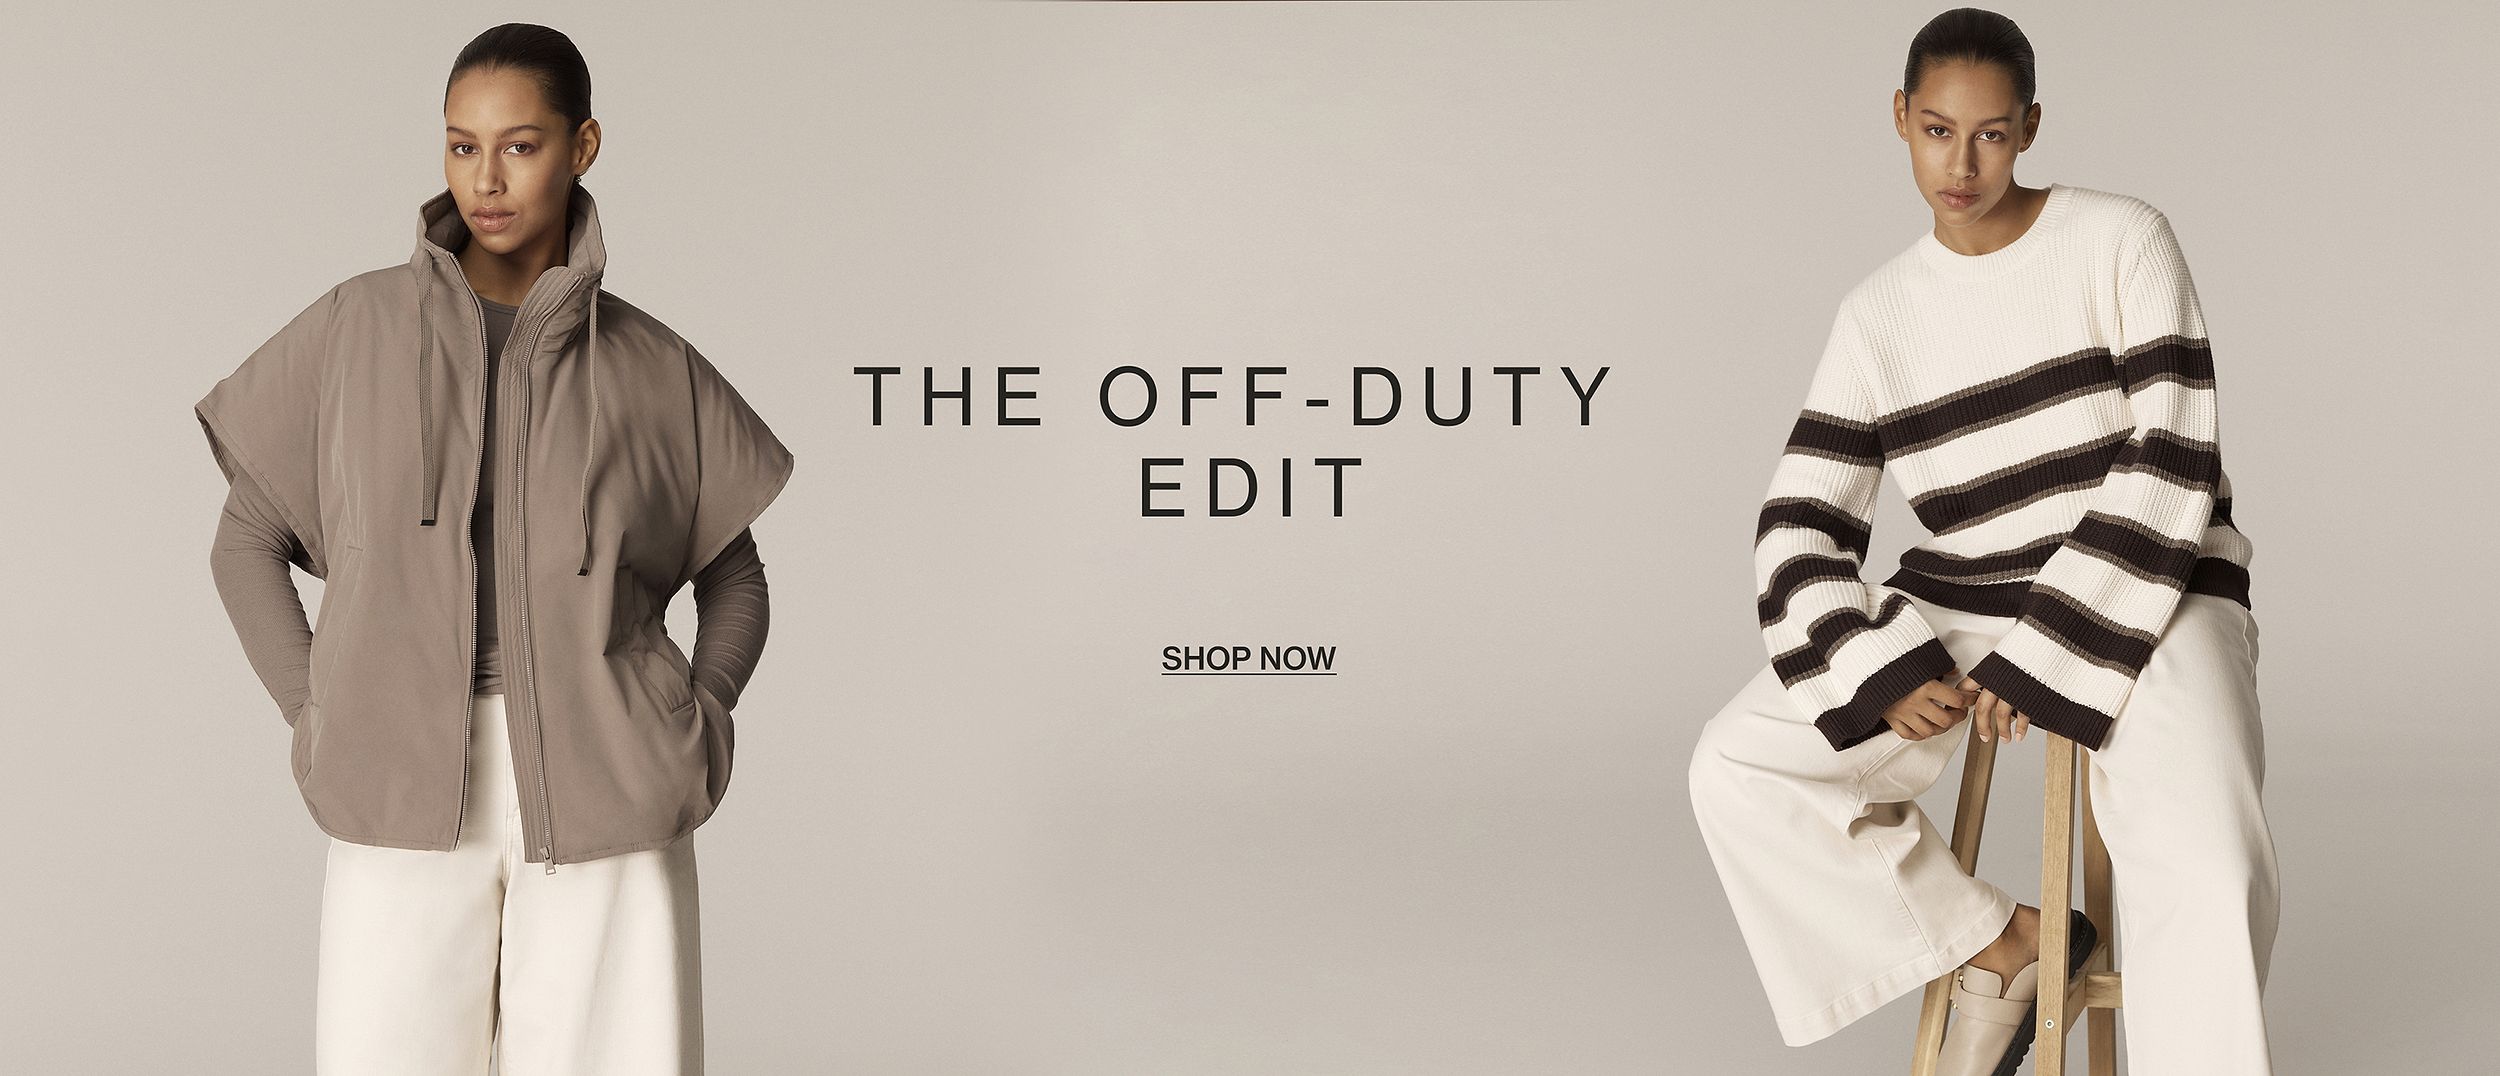 The Off-Duty Edit. Shop Now.